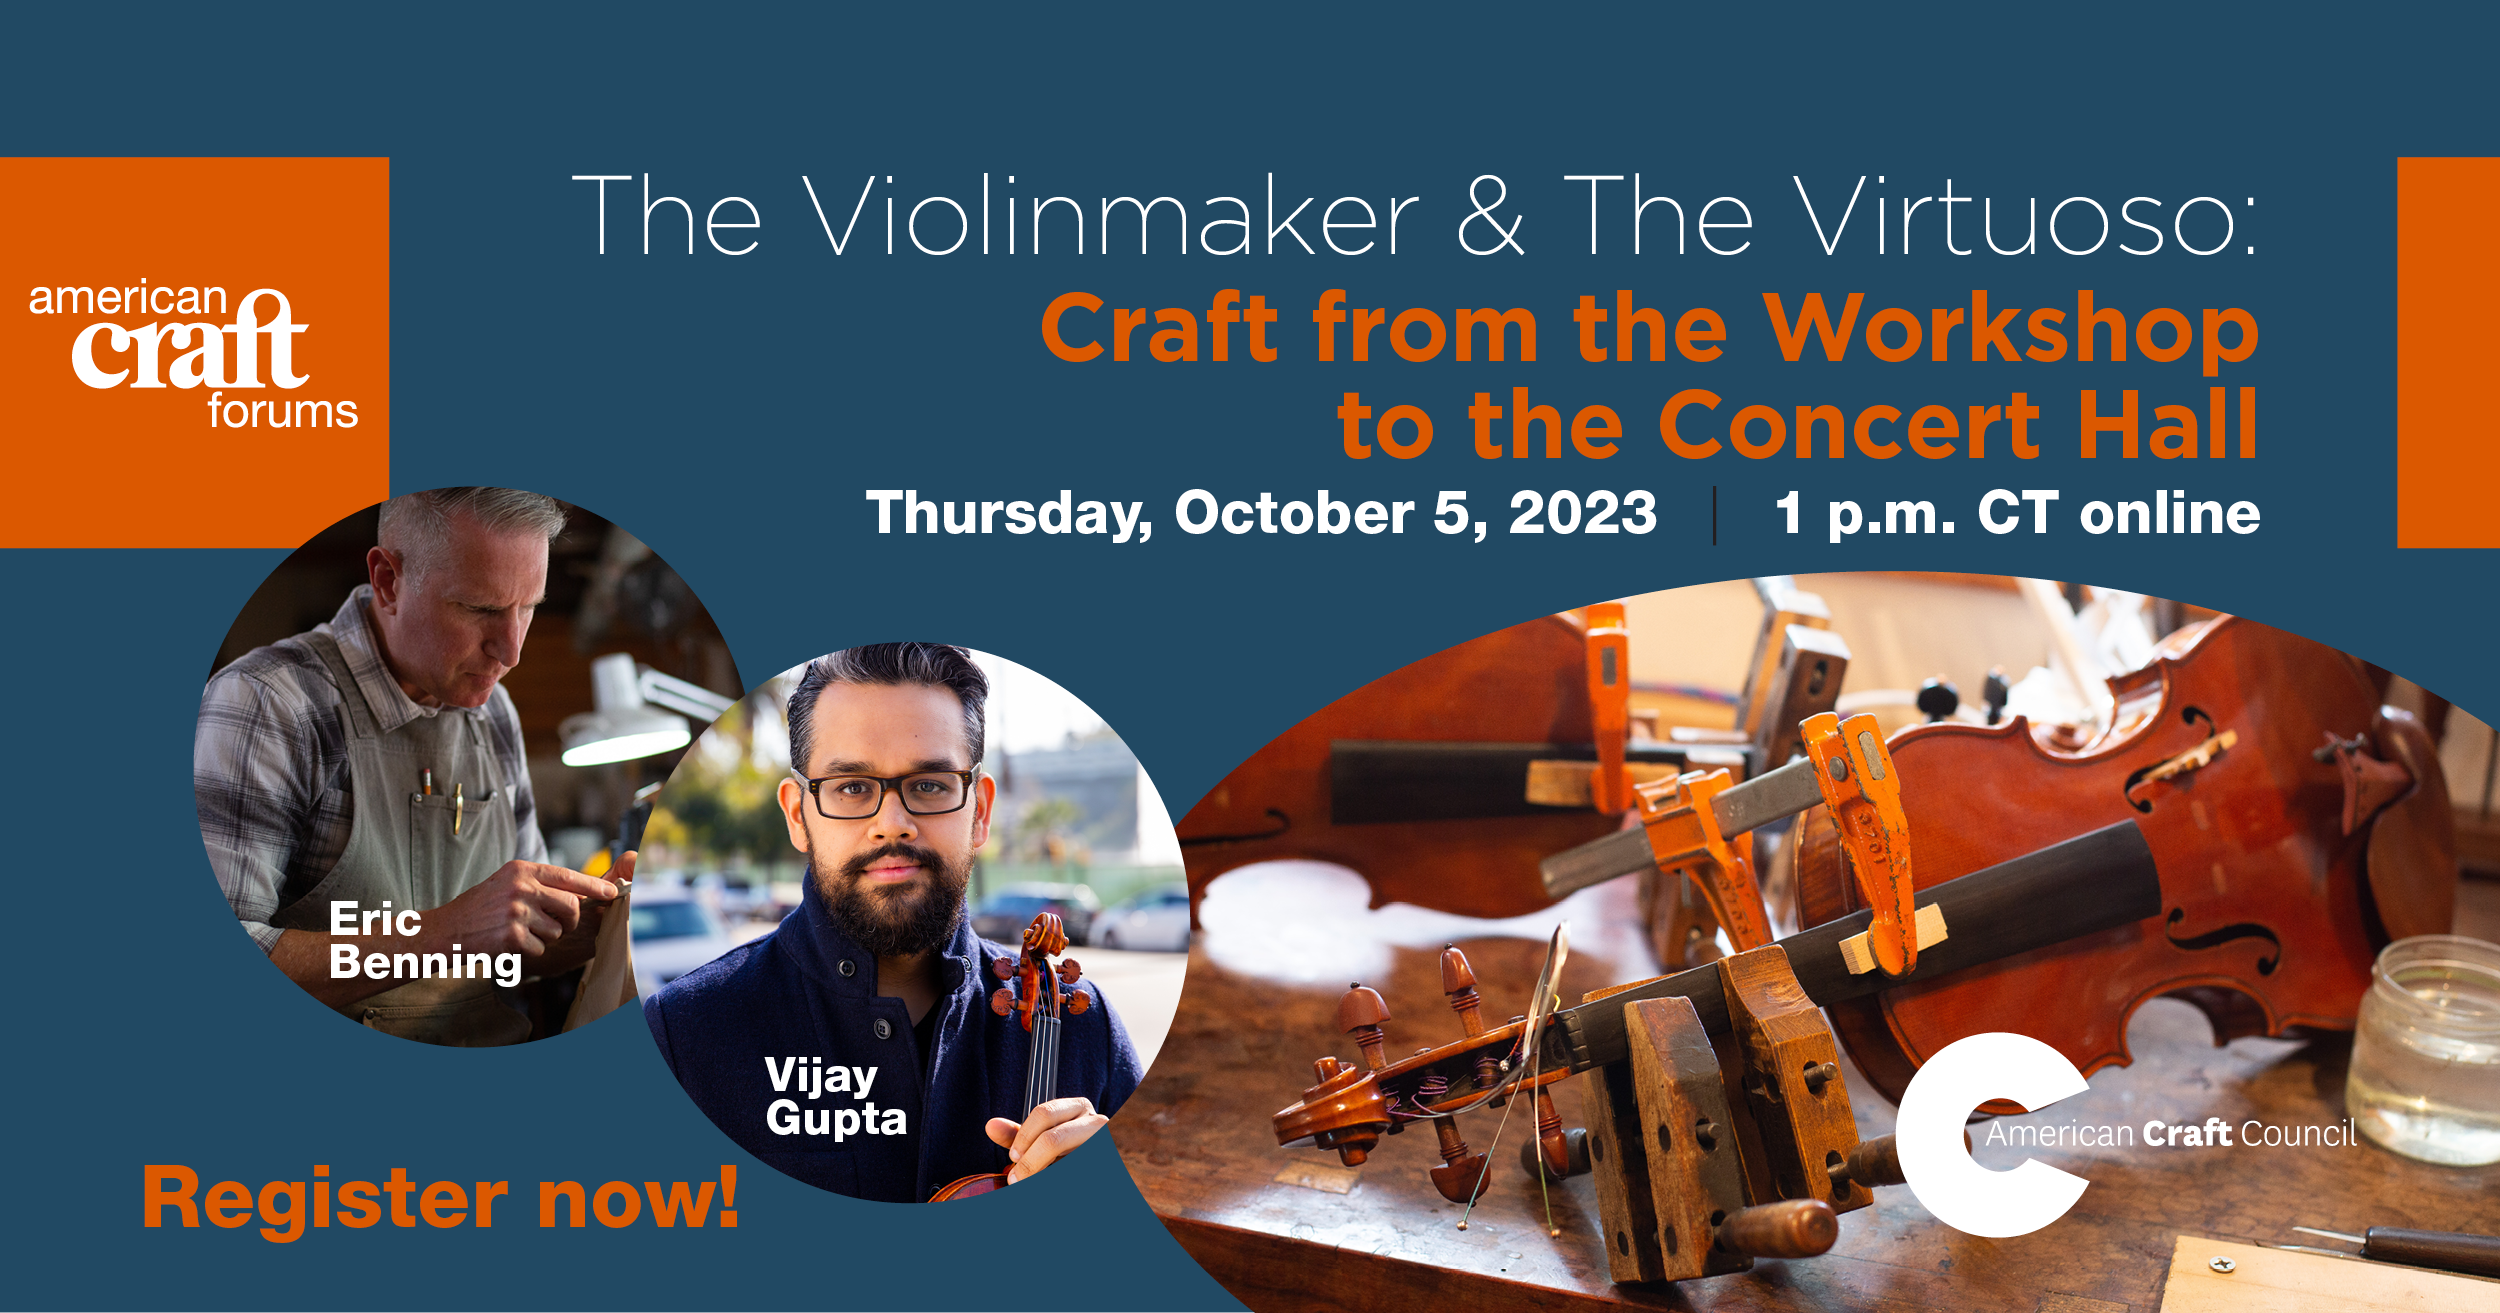 The Violinmaker and the Virtuoso event graphic depicting violinmaker Eric Benning and virtuoso Vijay Gupta